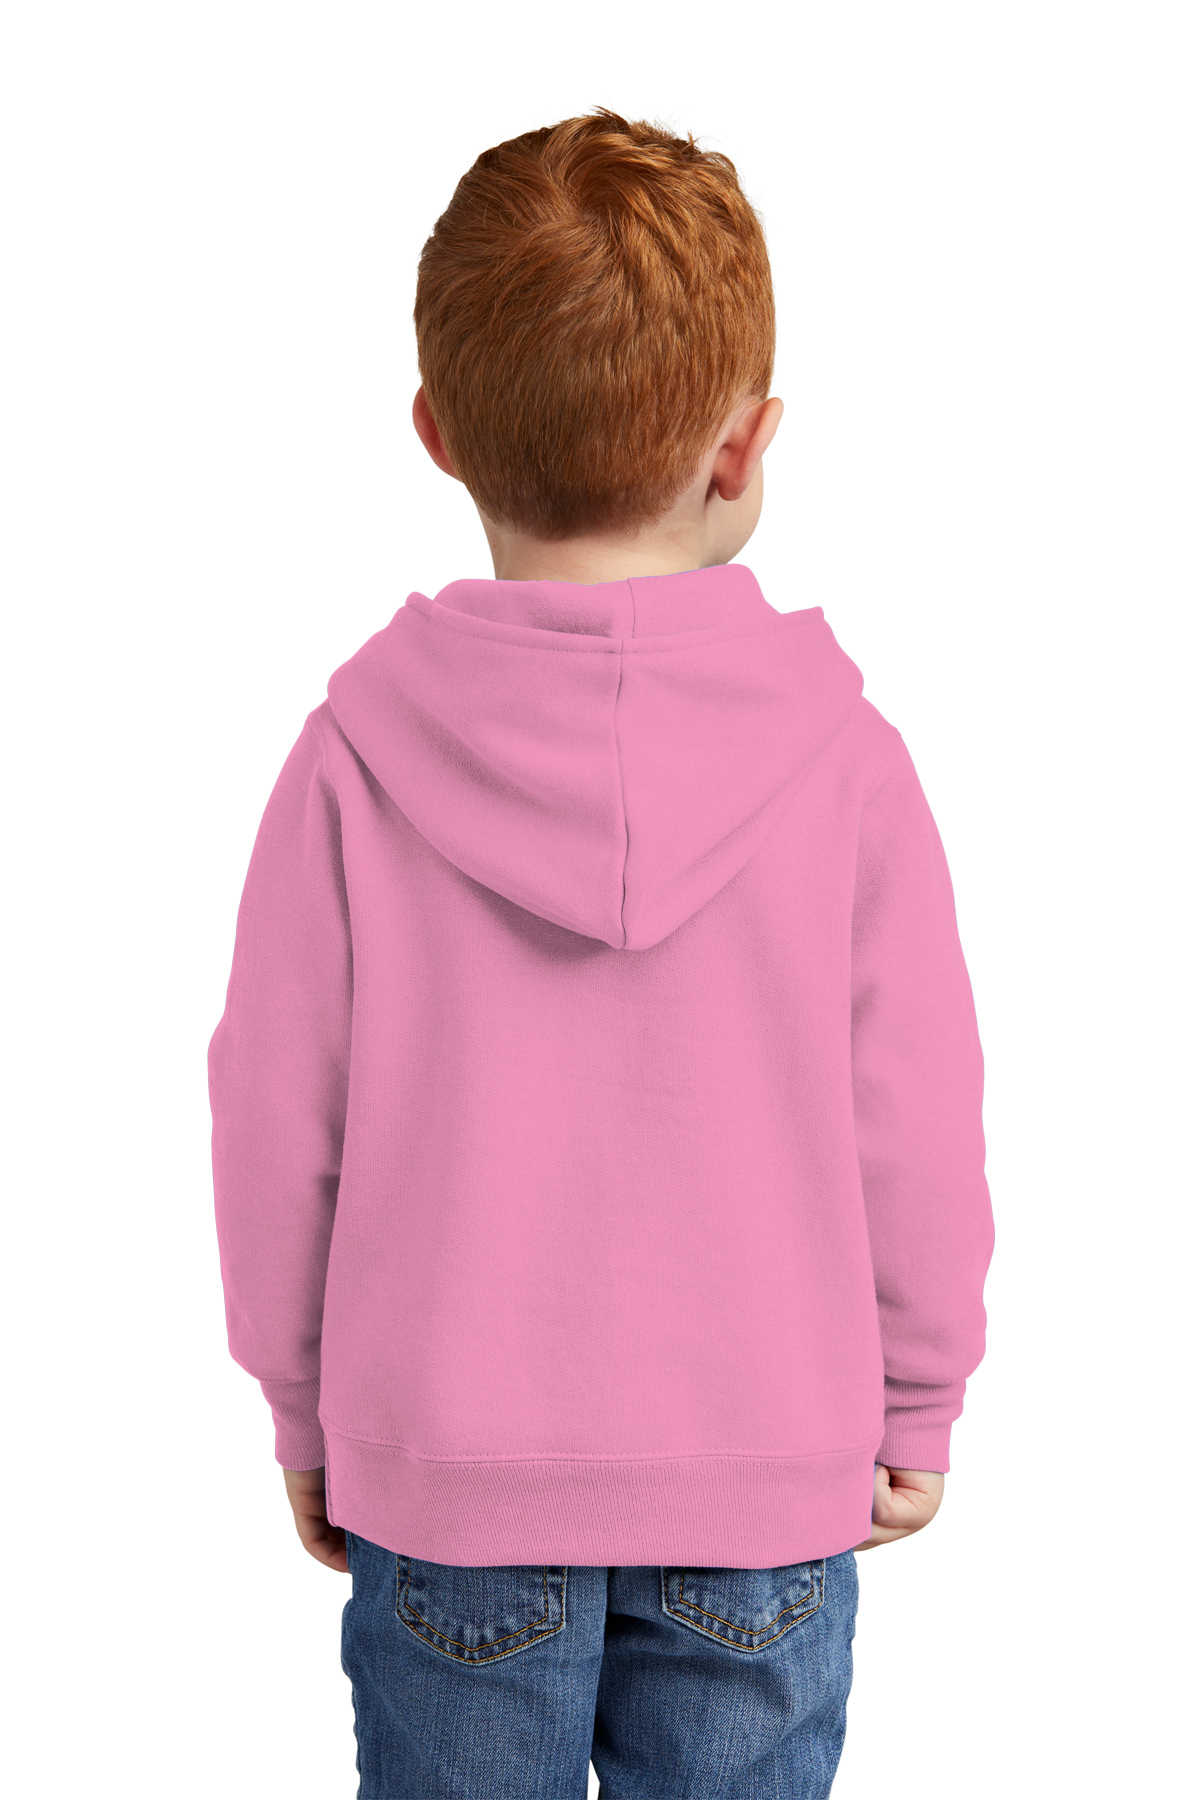 Port & Company Toddler Core Fleece Pullover Hooded Sweatshirt, Product